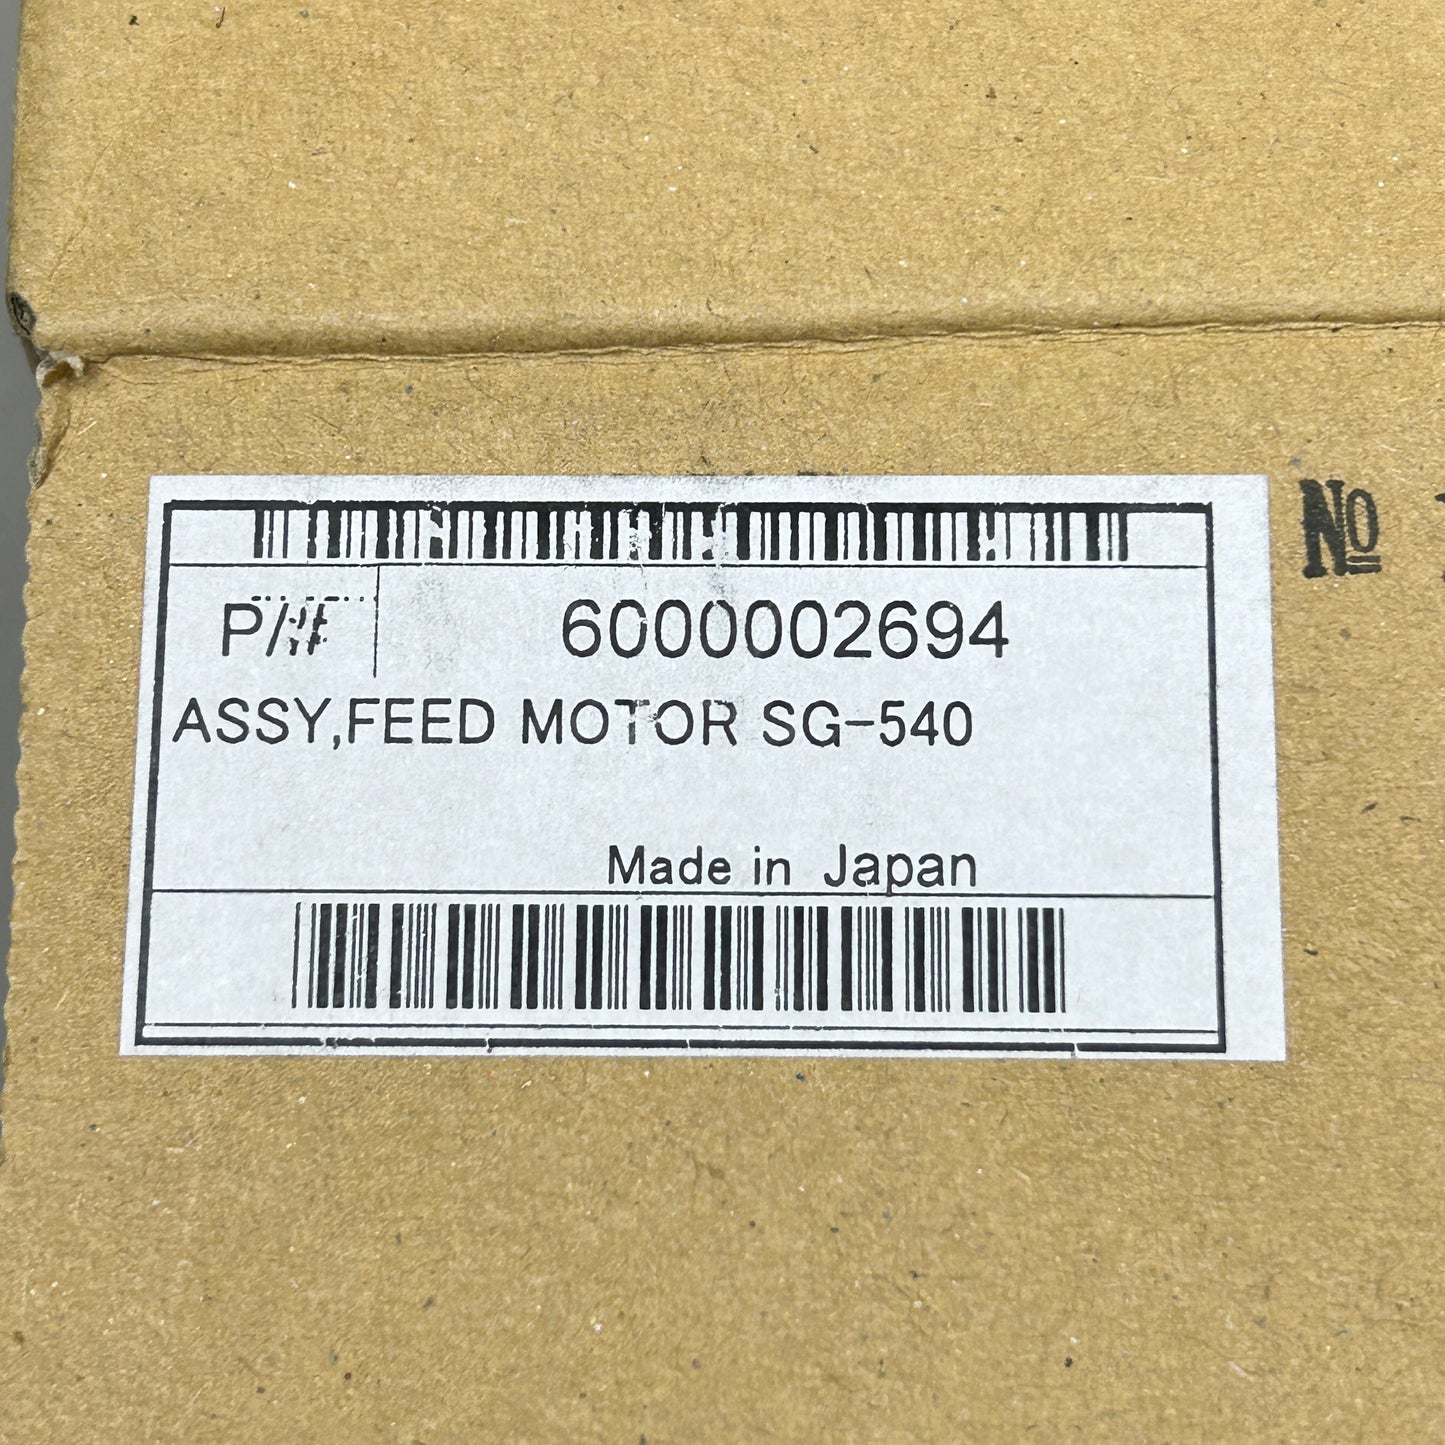 ROLAND ASSY Feed Motor SG-540 6000002694 (New)